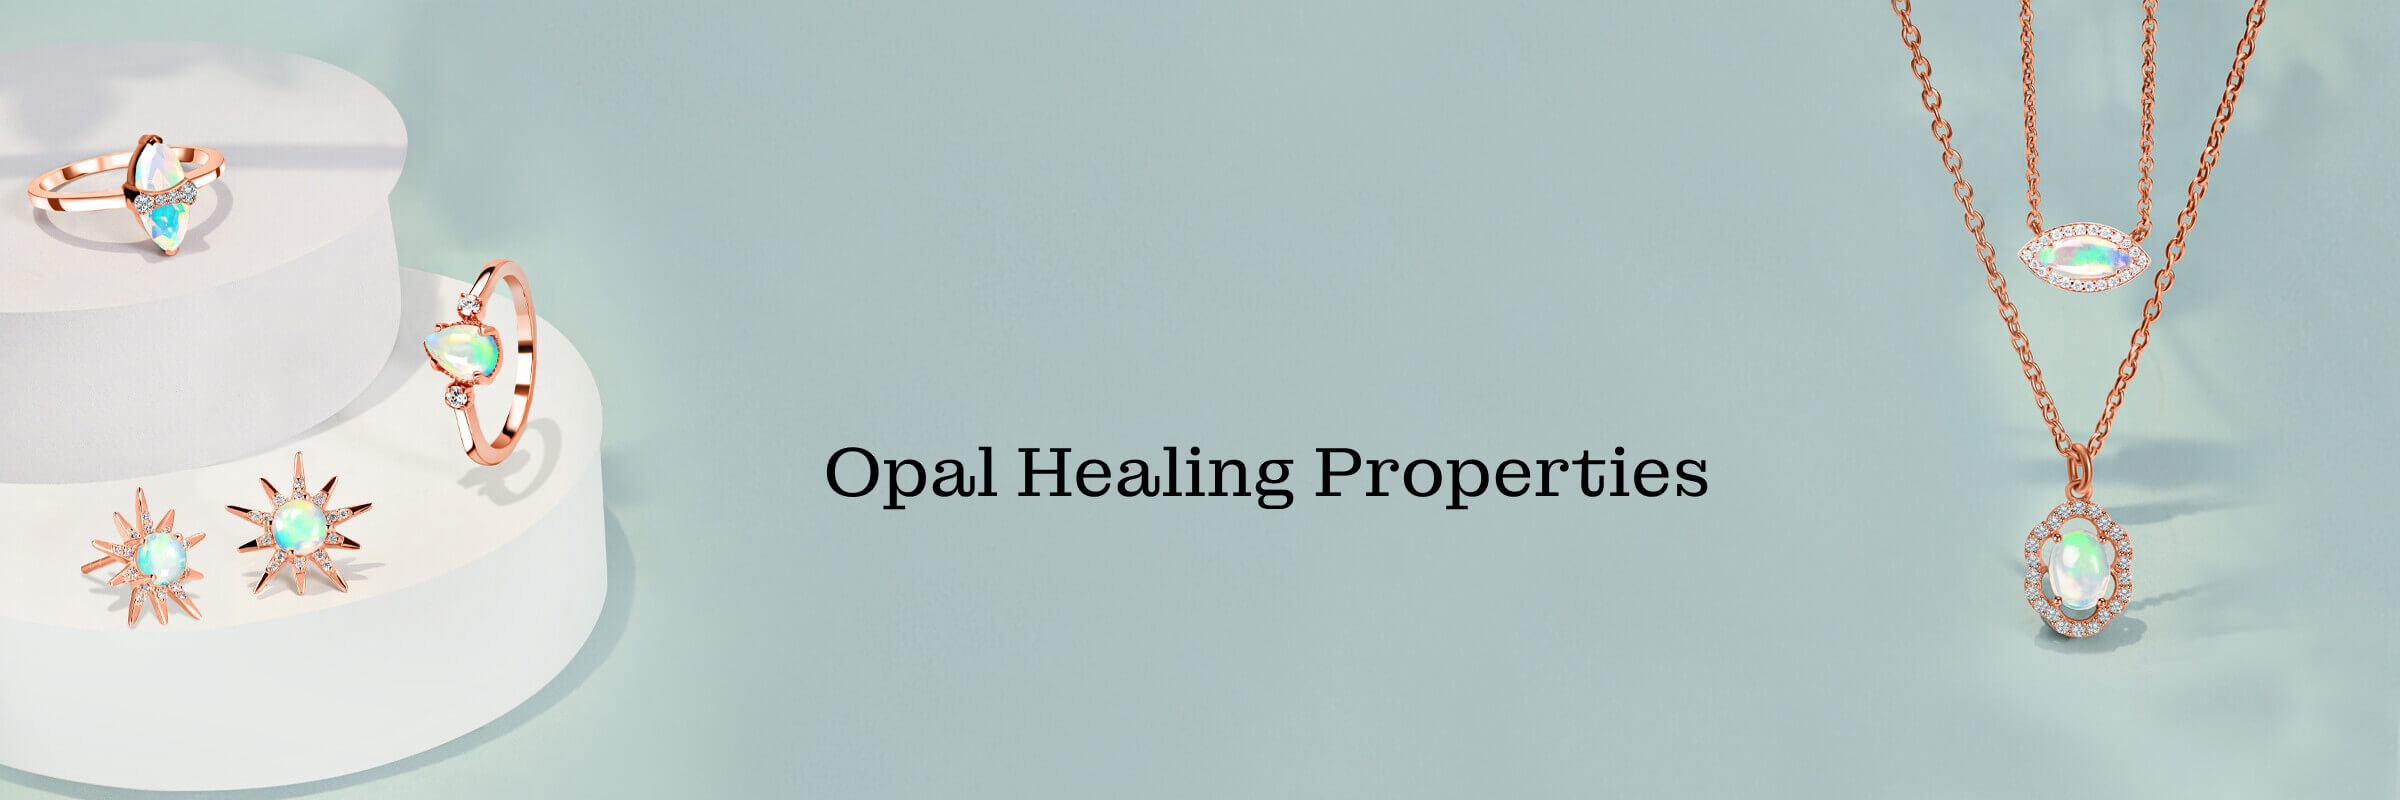 Healing properties of opal